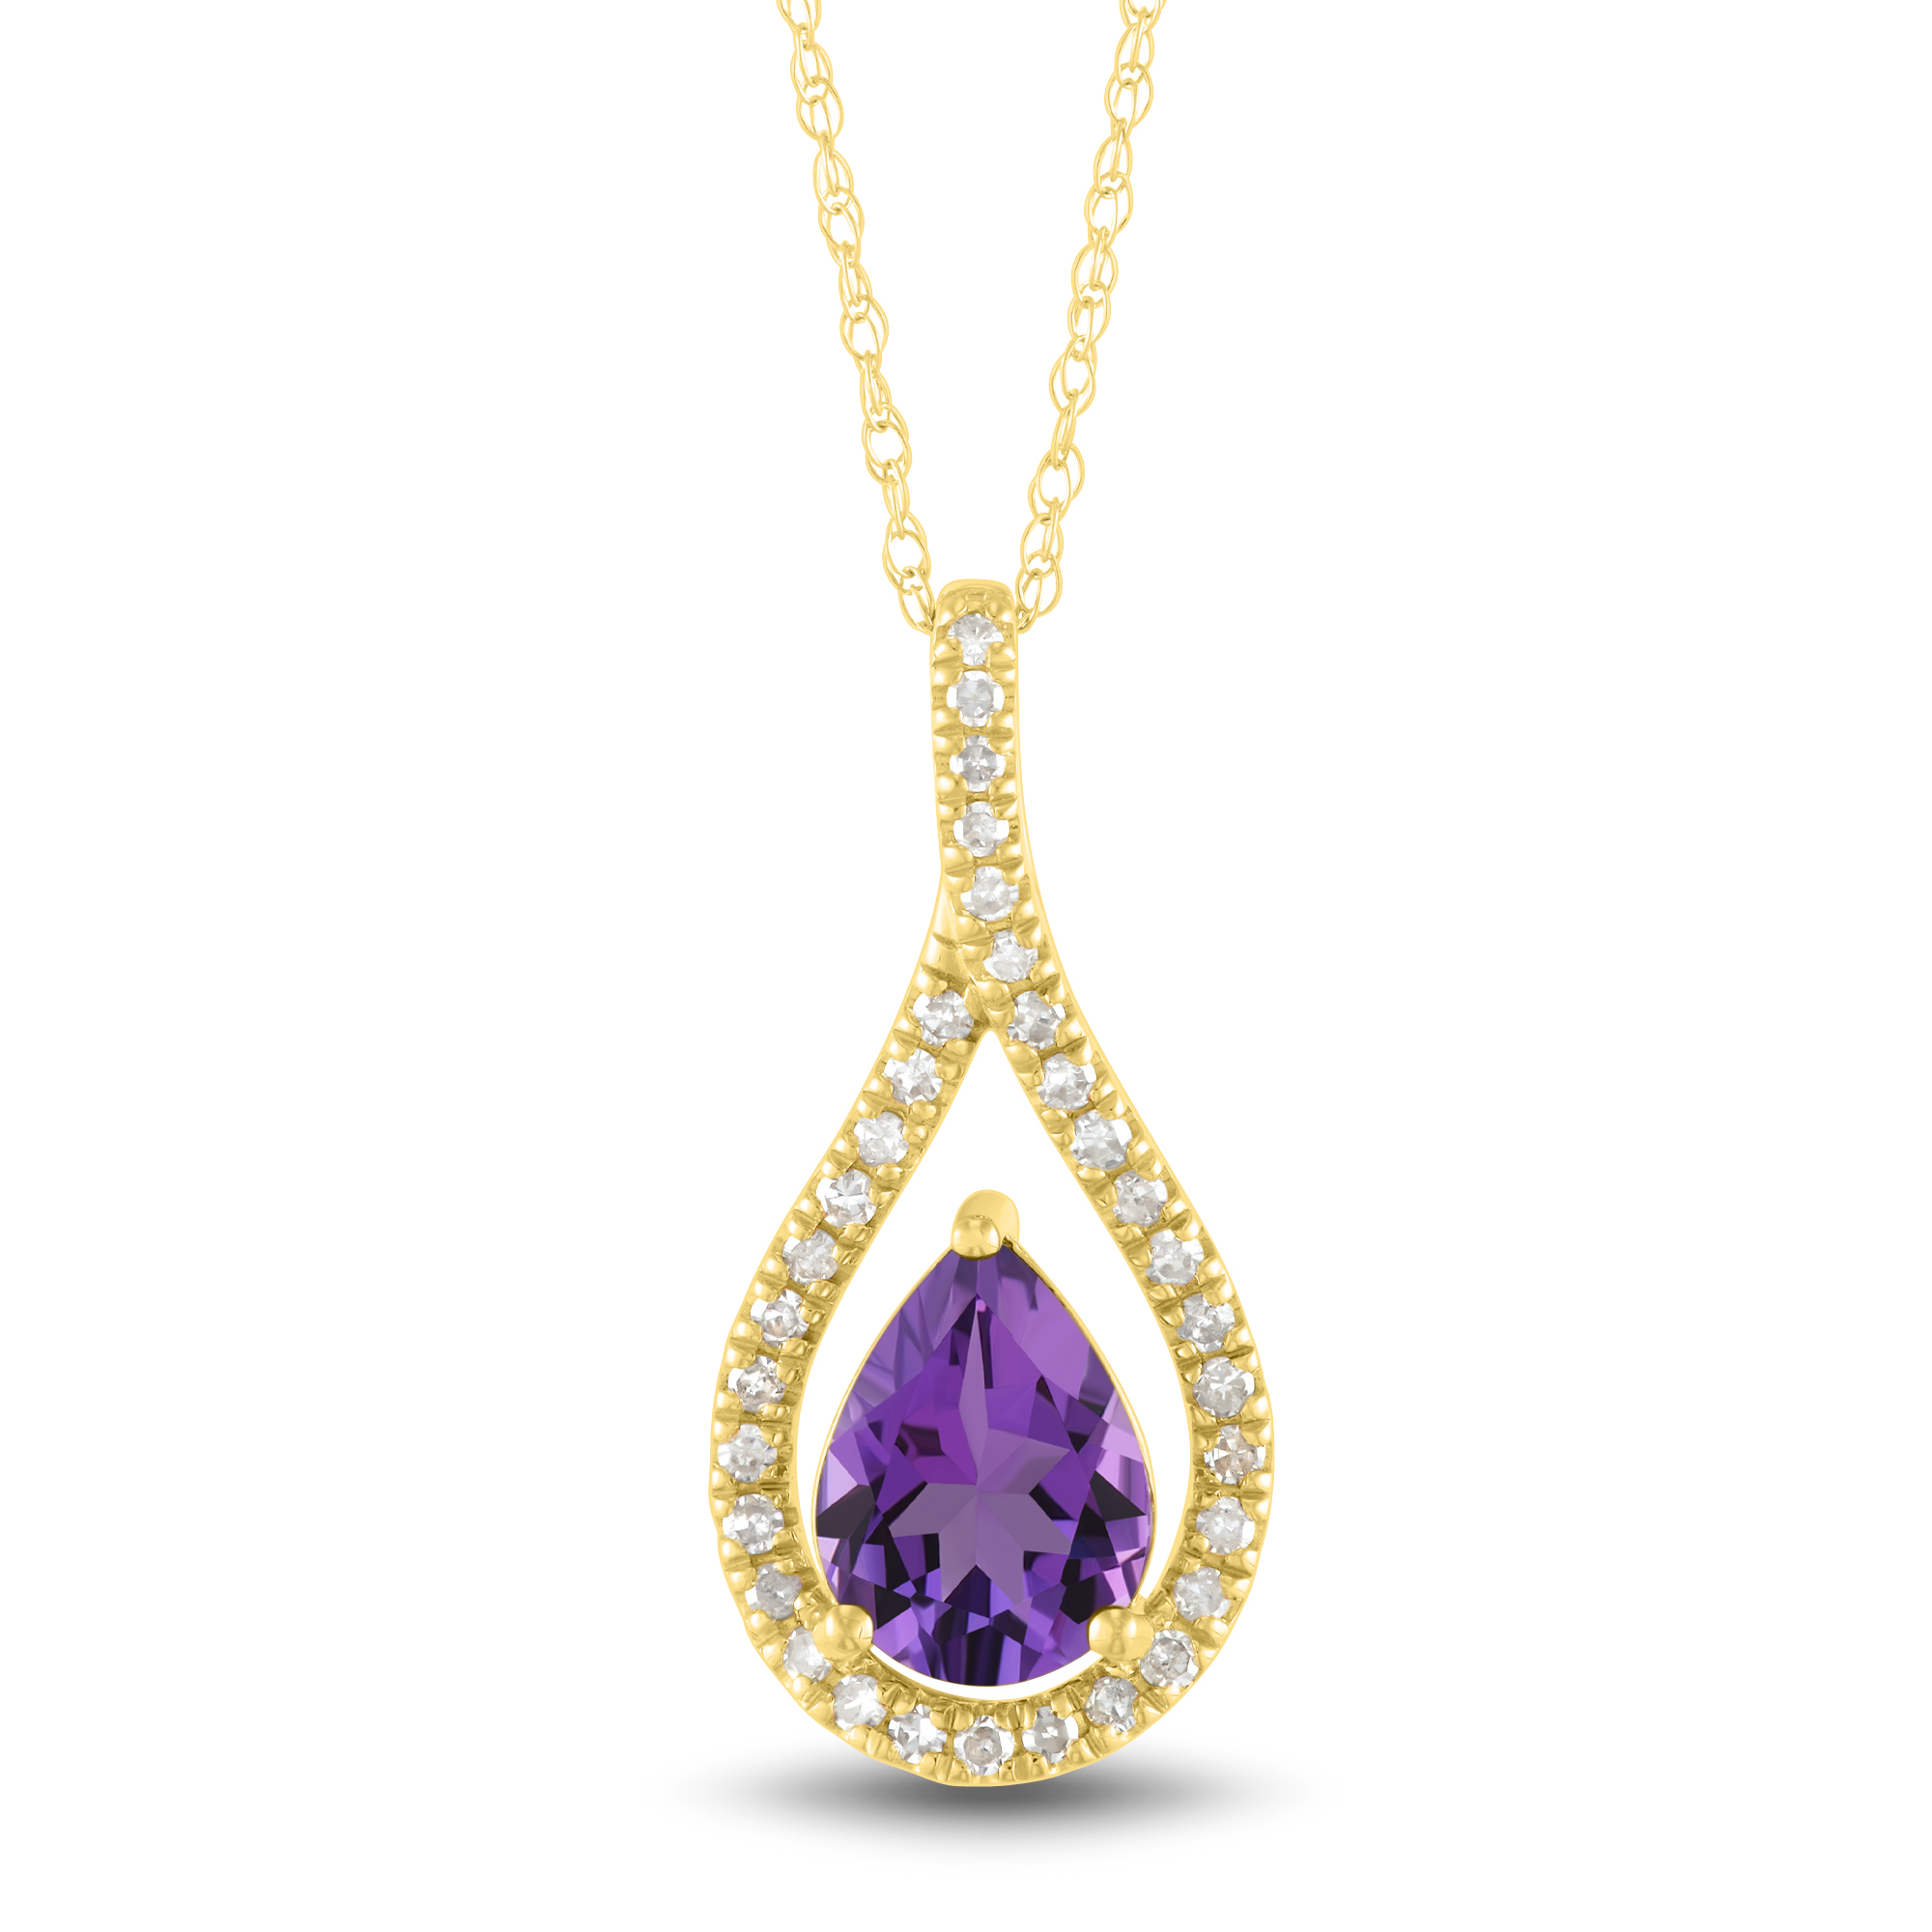 Discover beautiful multi-gemstone fine jewelry at Helzberg Diamonds today!